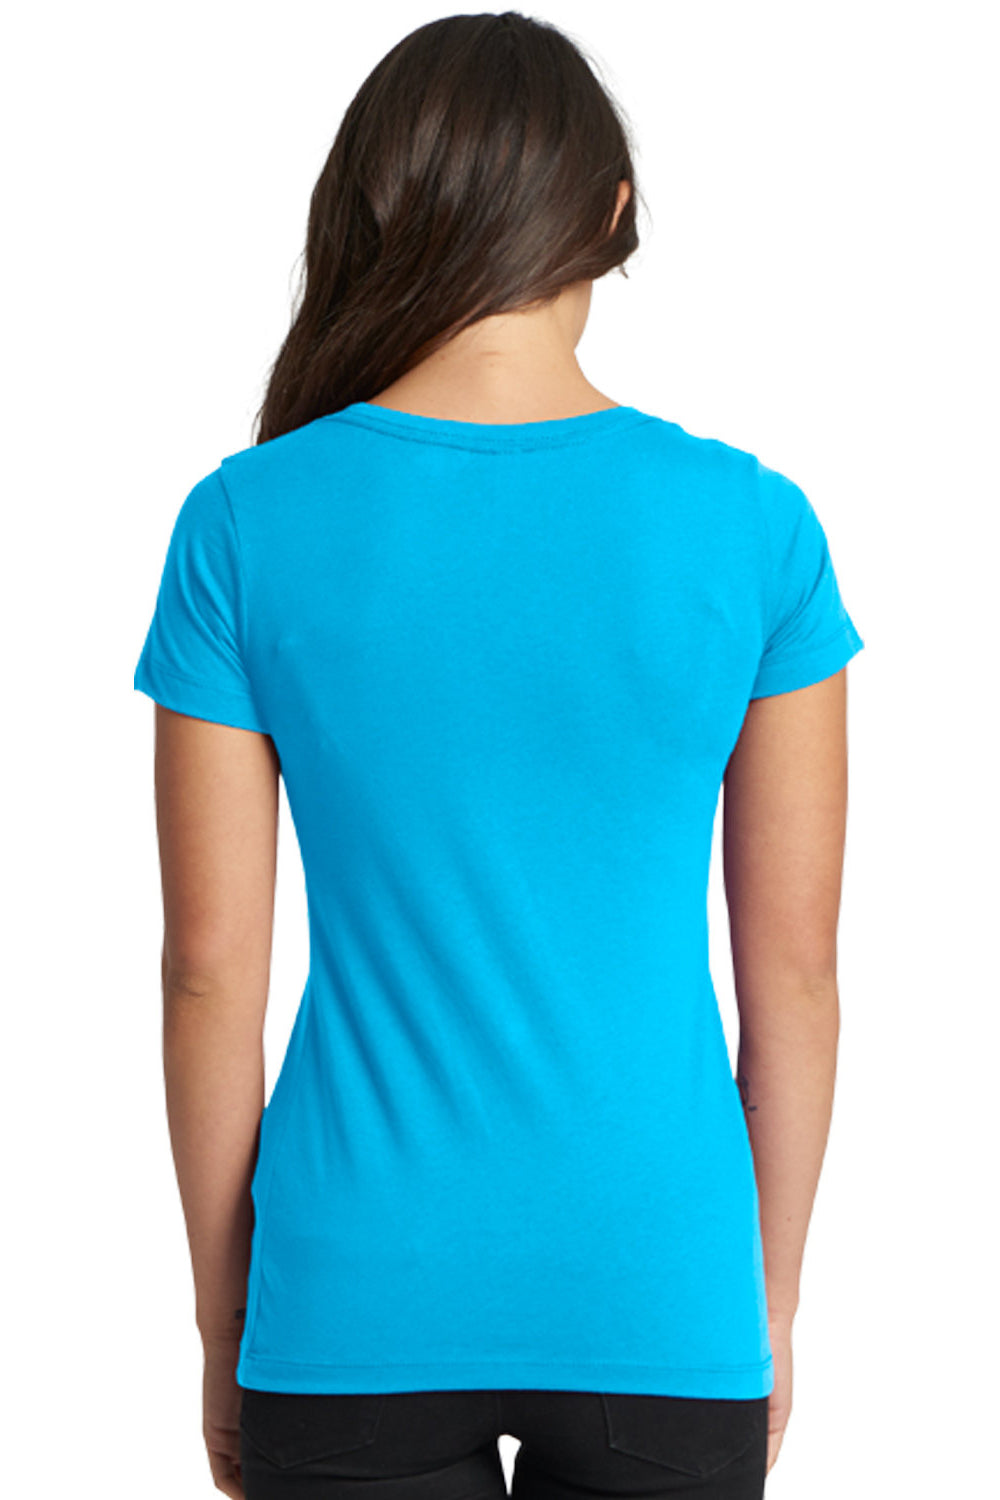 Next Level N1510/1510 Womens Ideal Jersey Short Sleeve Crewneck T-Shirt Turquoise Blue Back